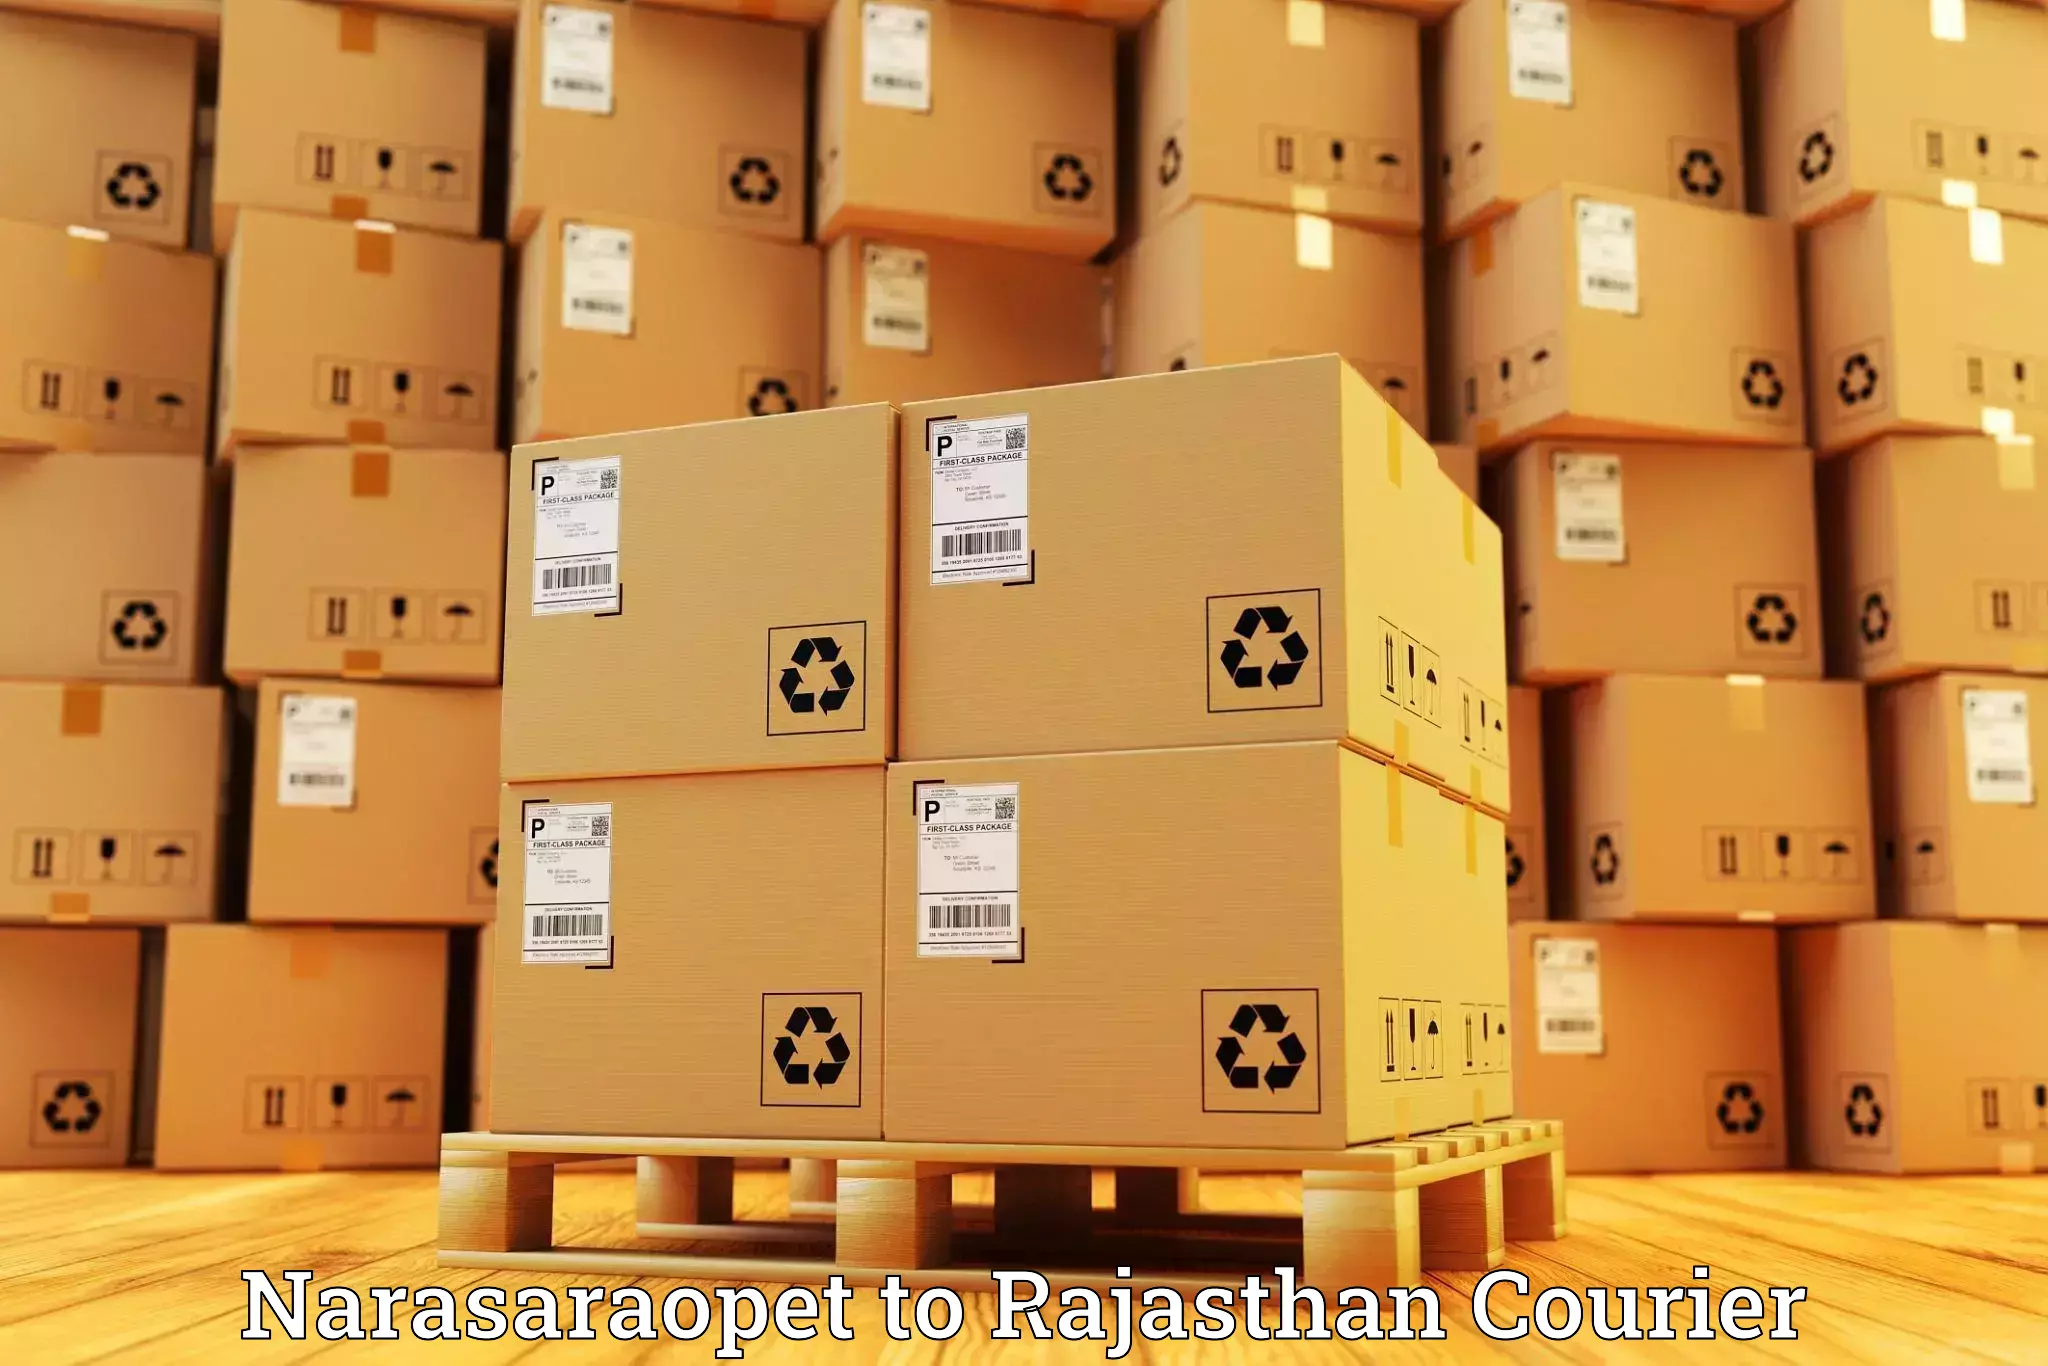 Global logistics network Narasaraopet to Rajasthan